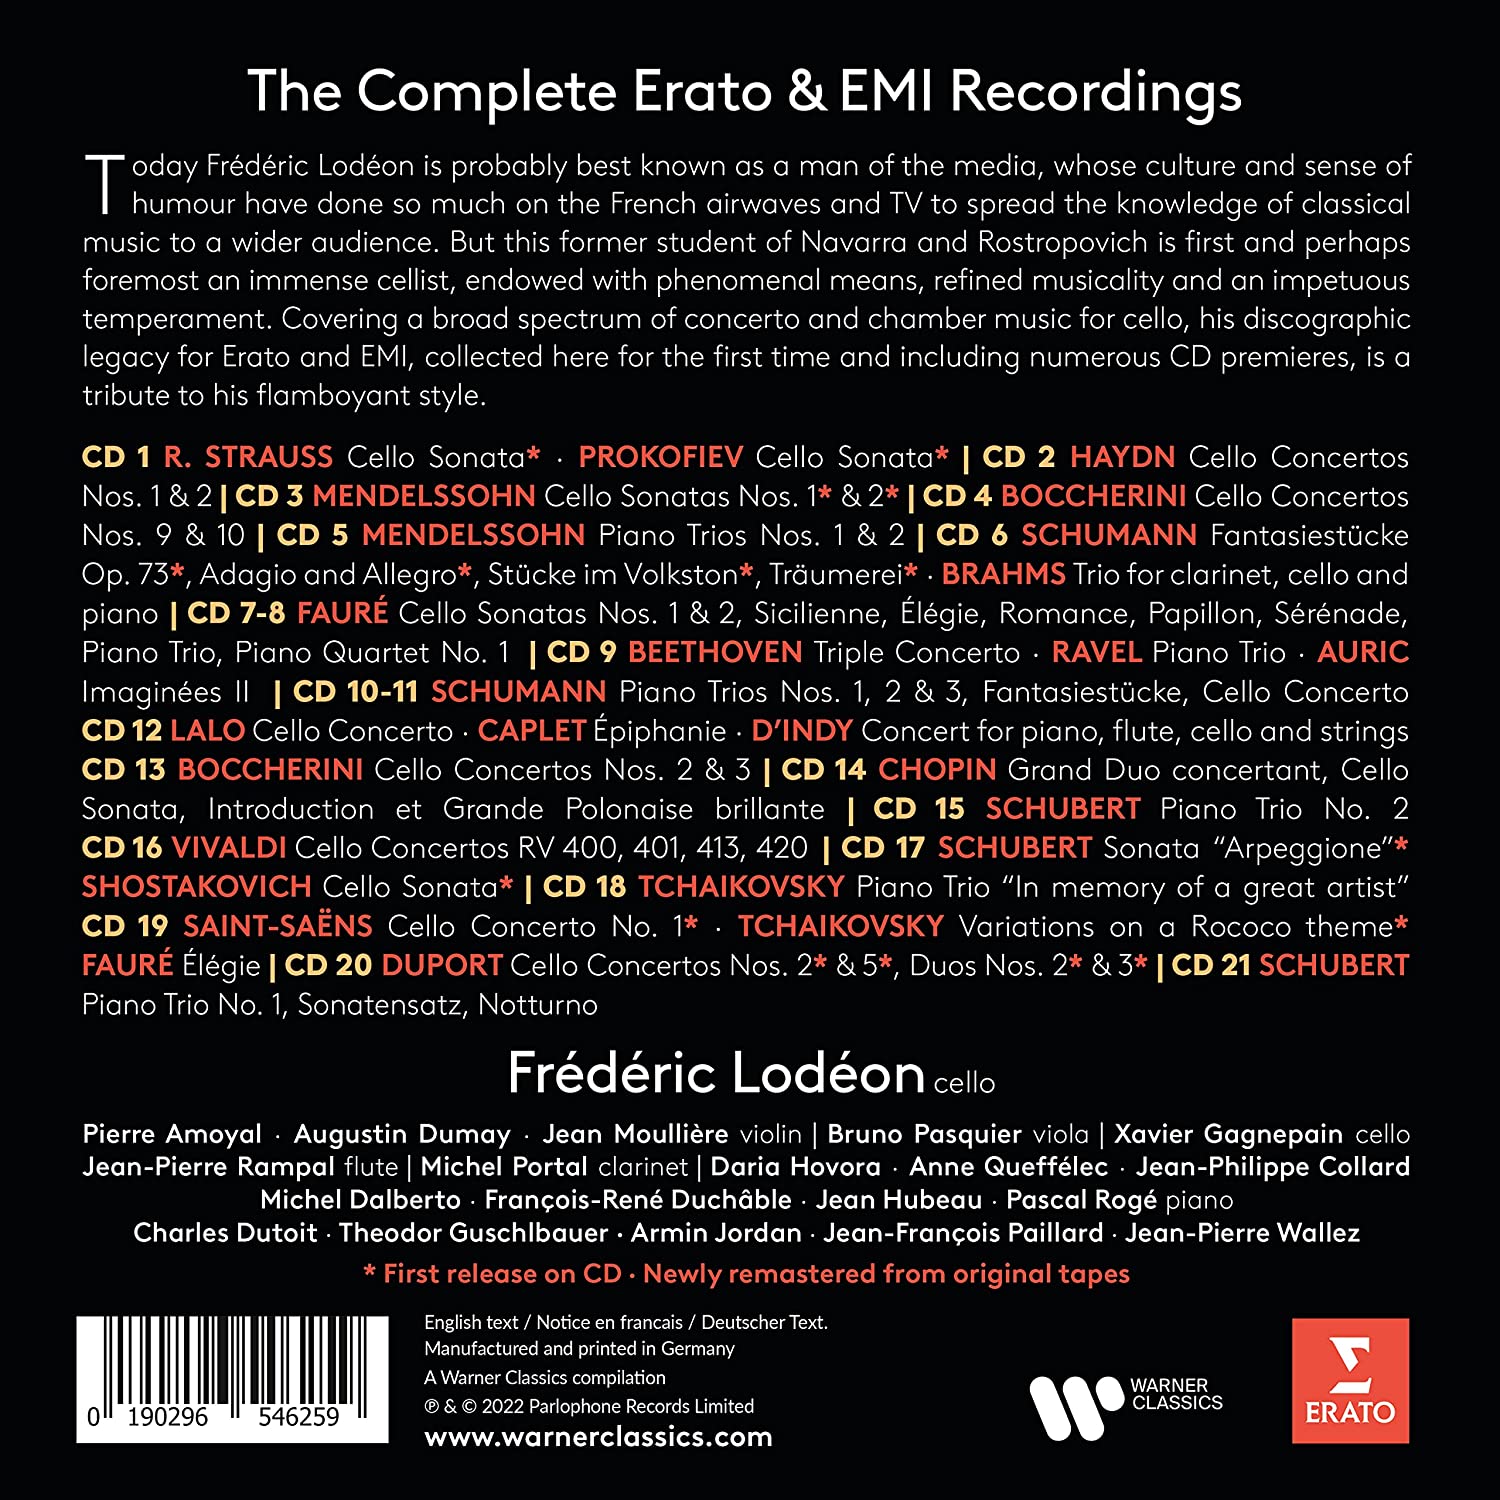 Frederic Lodeon 프레데릭 로데옹 에라토 녹음 전곡집 (The Complete Erato & EMI Recordings - Le Flamboyant) 